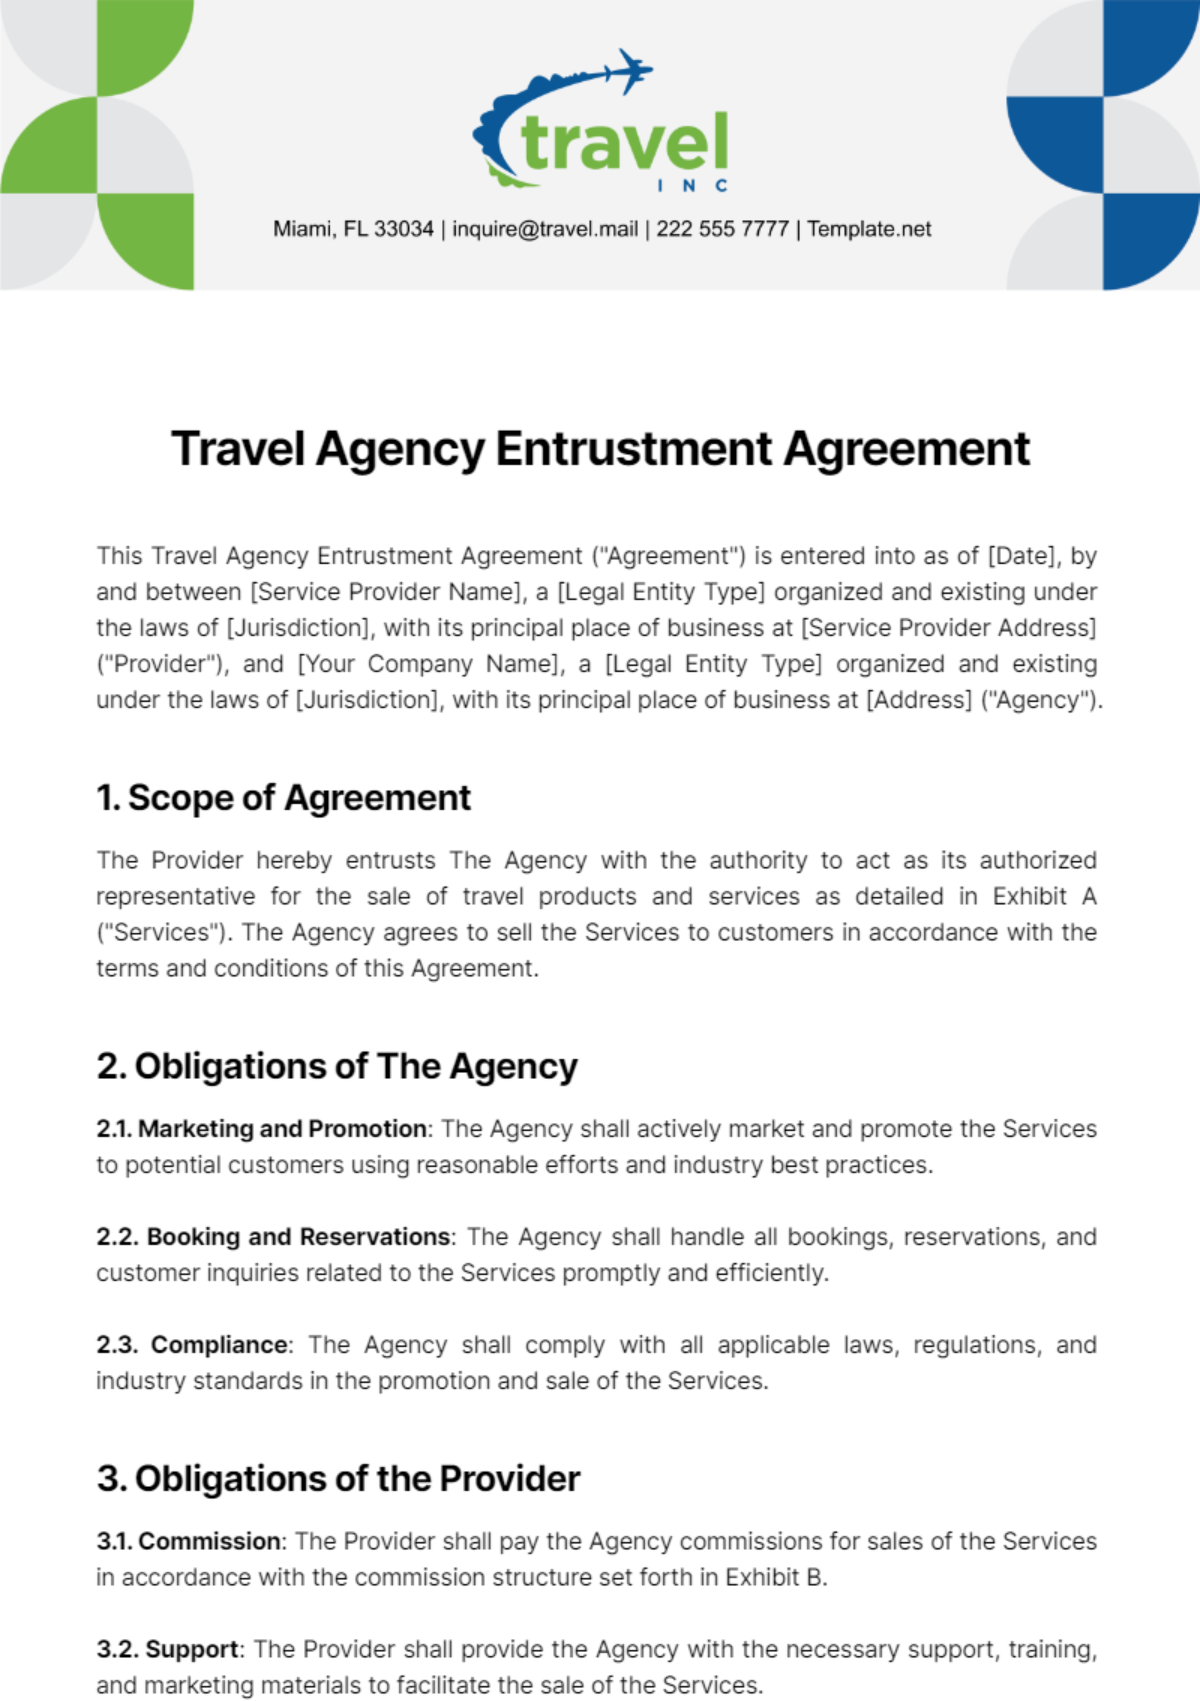 Travel Agency Entrustment Agreement Template